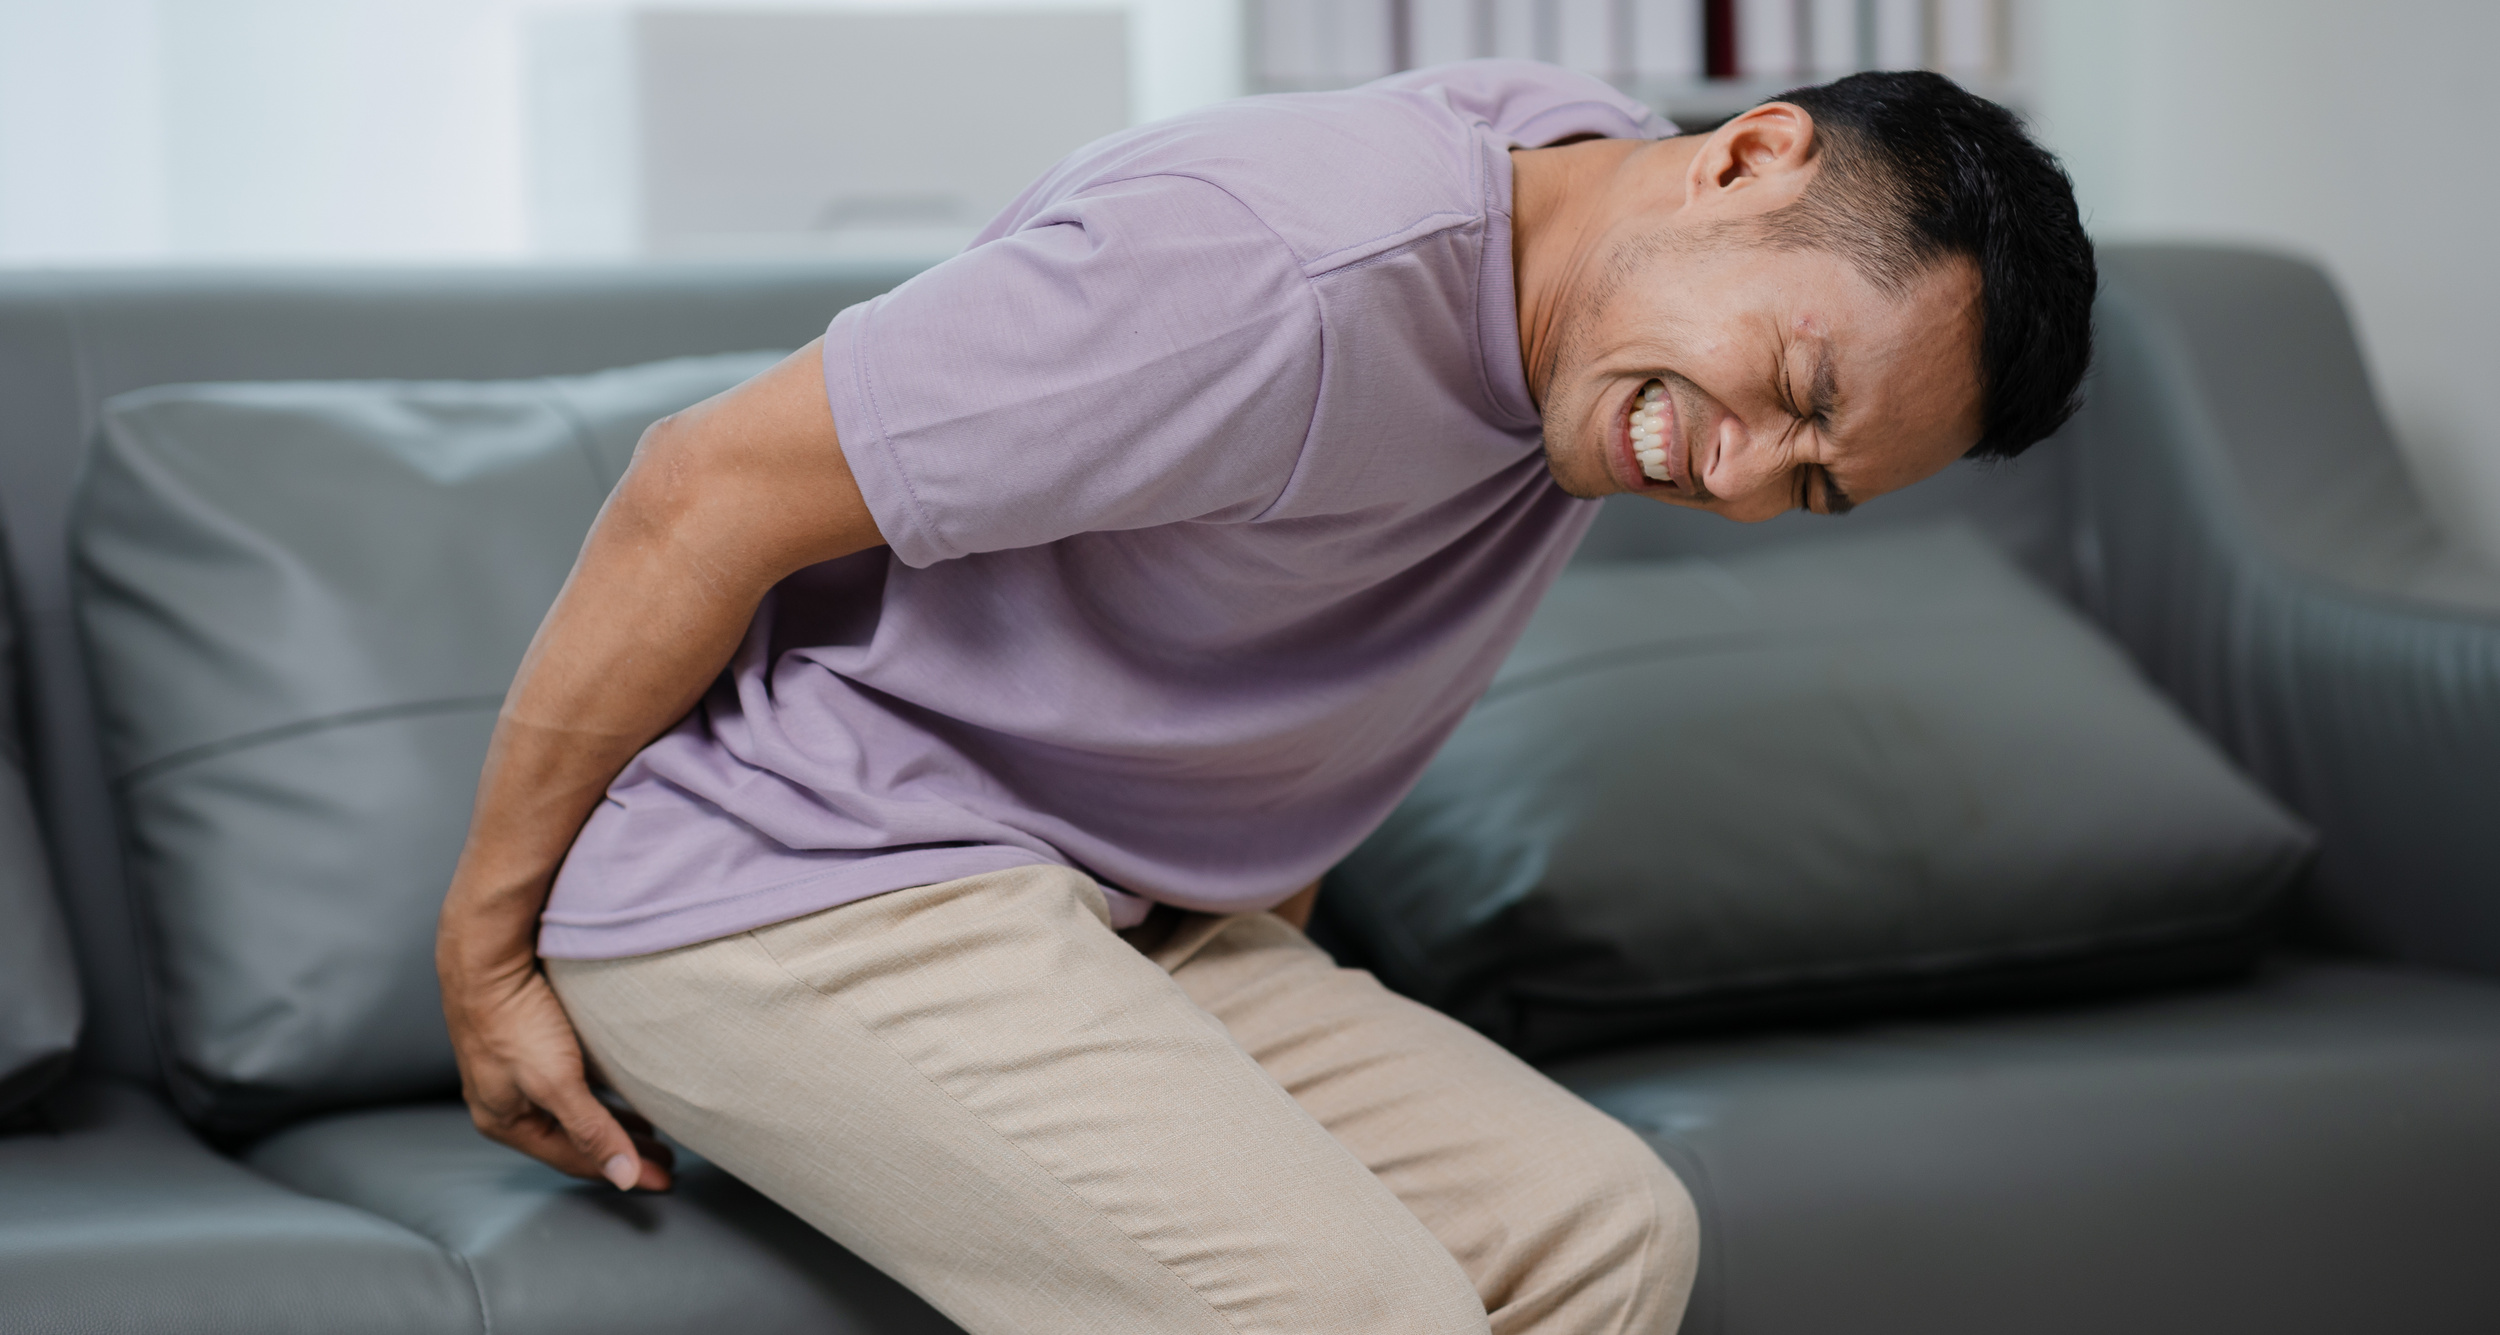 Le syndrome anal sans repos est une variante du syndrome des jambes sans repos. © NanTua, Adobe Stock